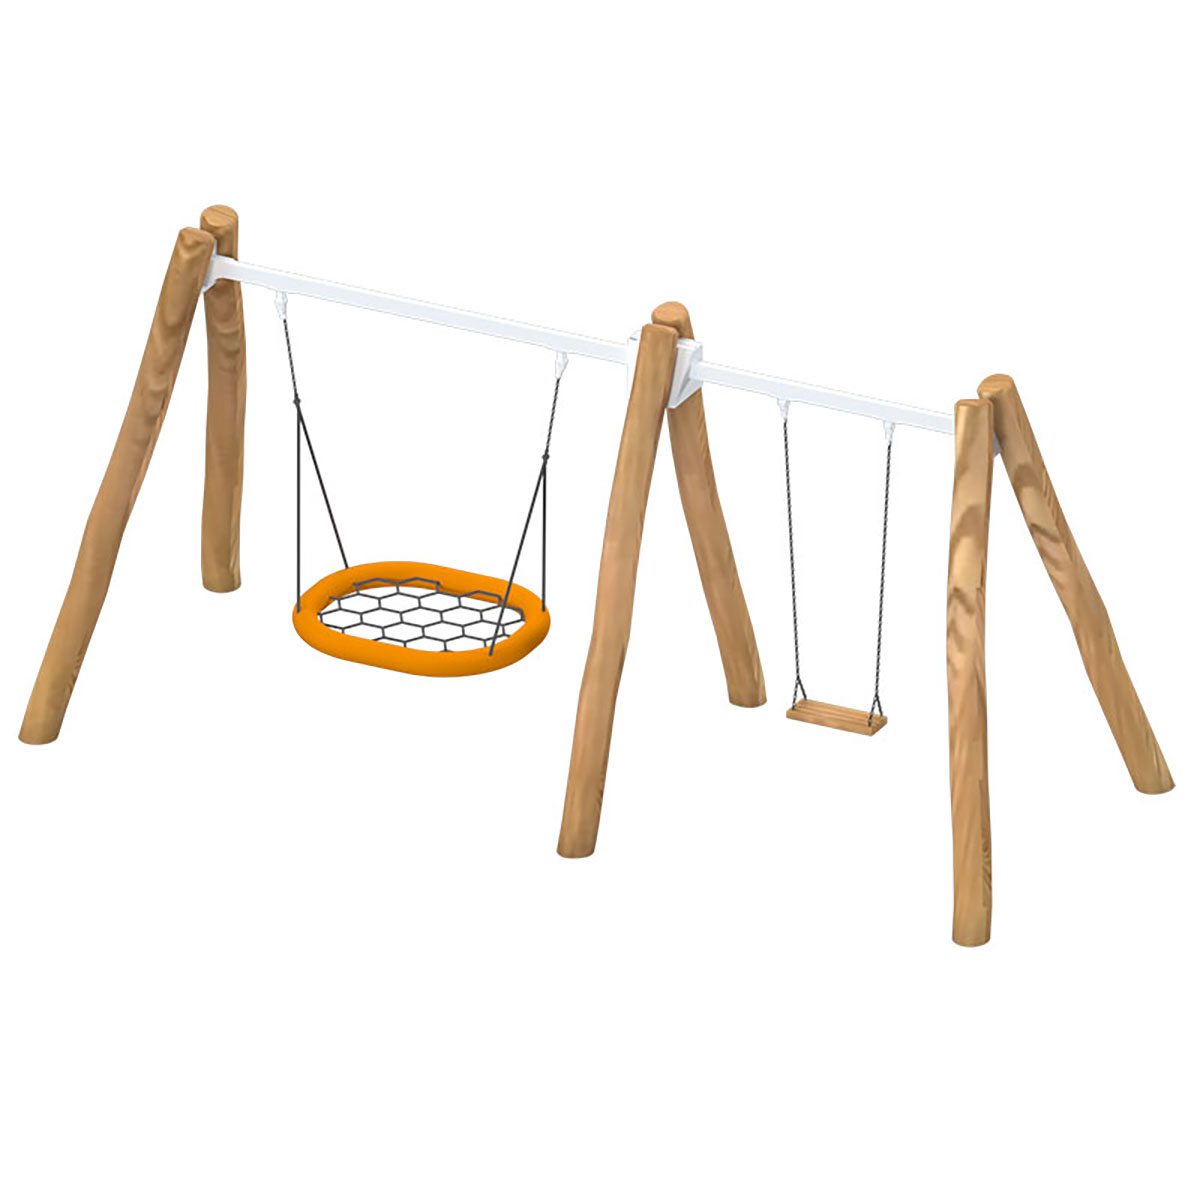  Swing Set，Swing Sets For Kids，Wooden Swing Sets Factory